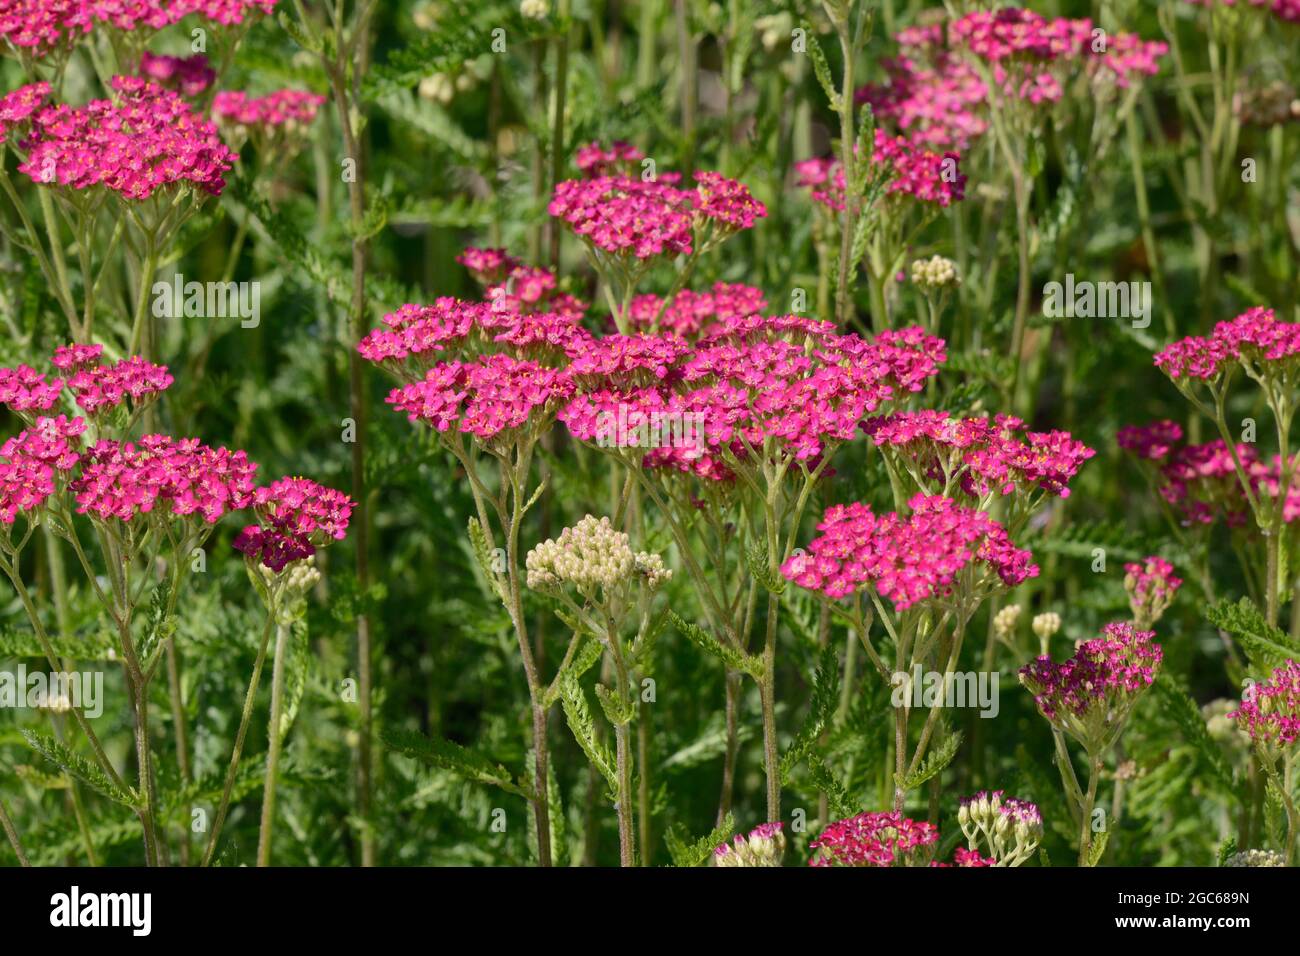 Achillea millefolium Cerise Queen Yarrow cerise Queen flattened clusters of small daisy like flower heads Stock Photo